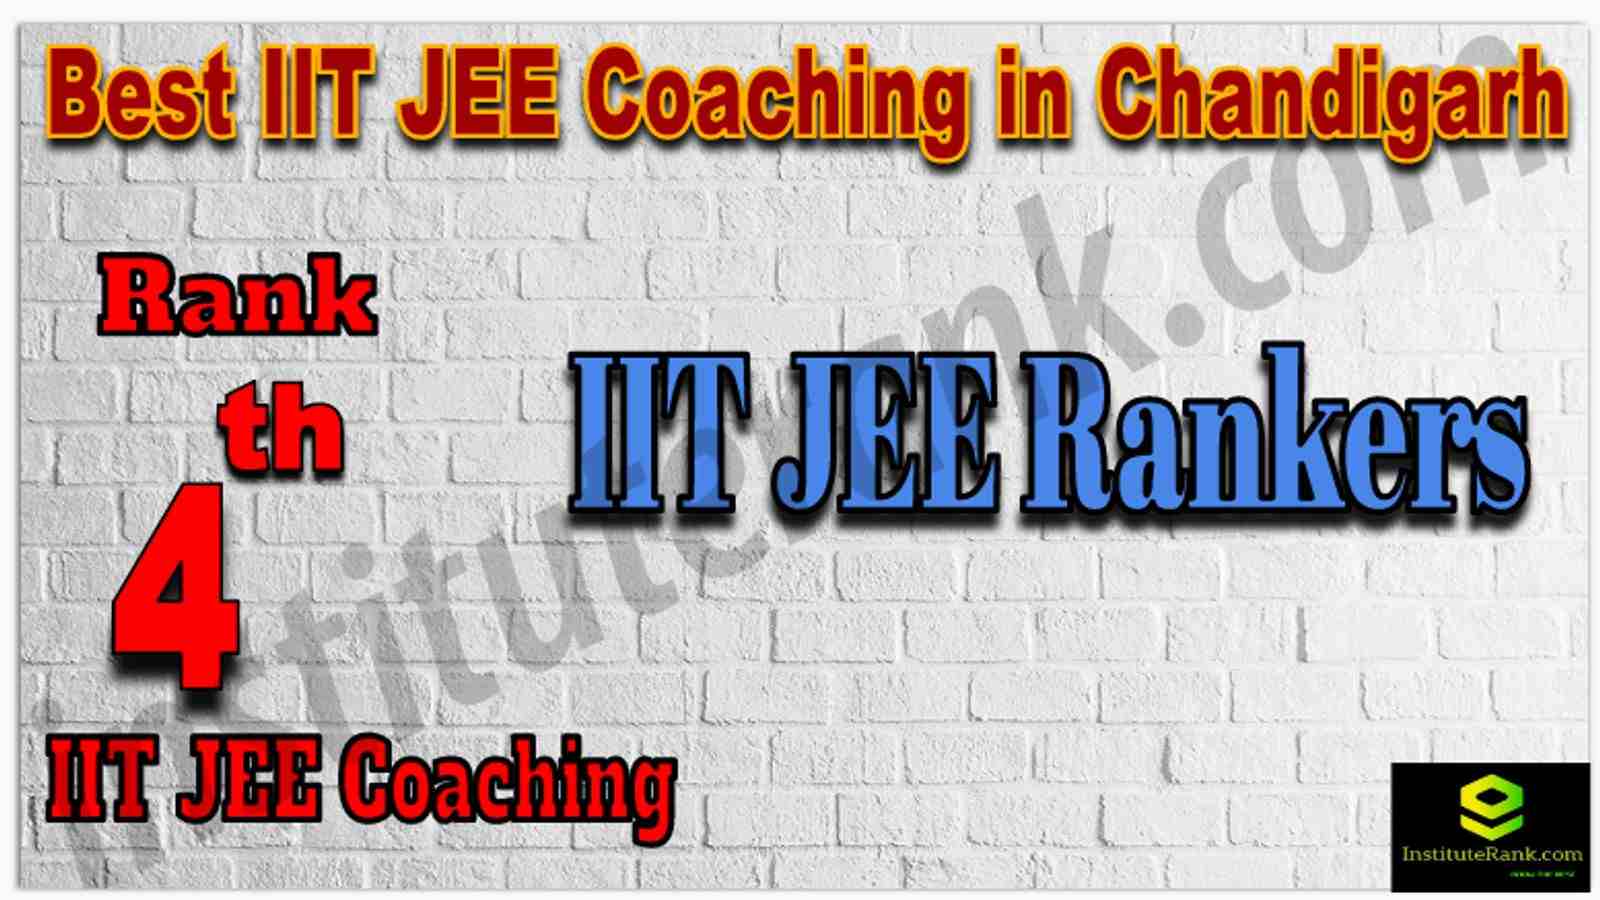 Rank 4th Best IIT JEE Coaching in Chandigarh